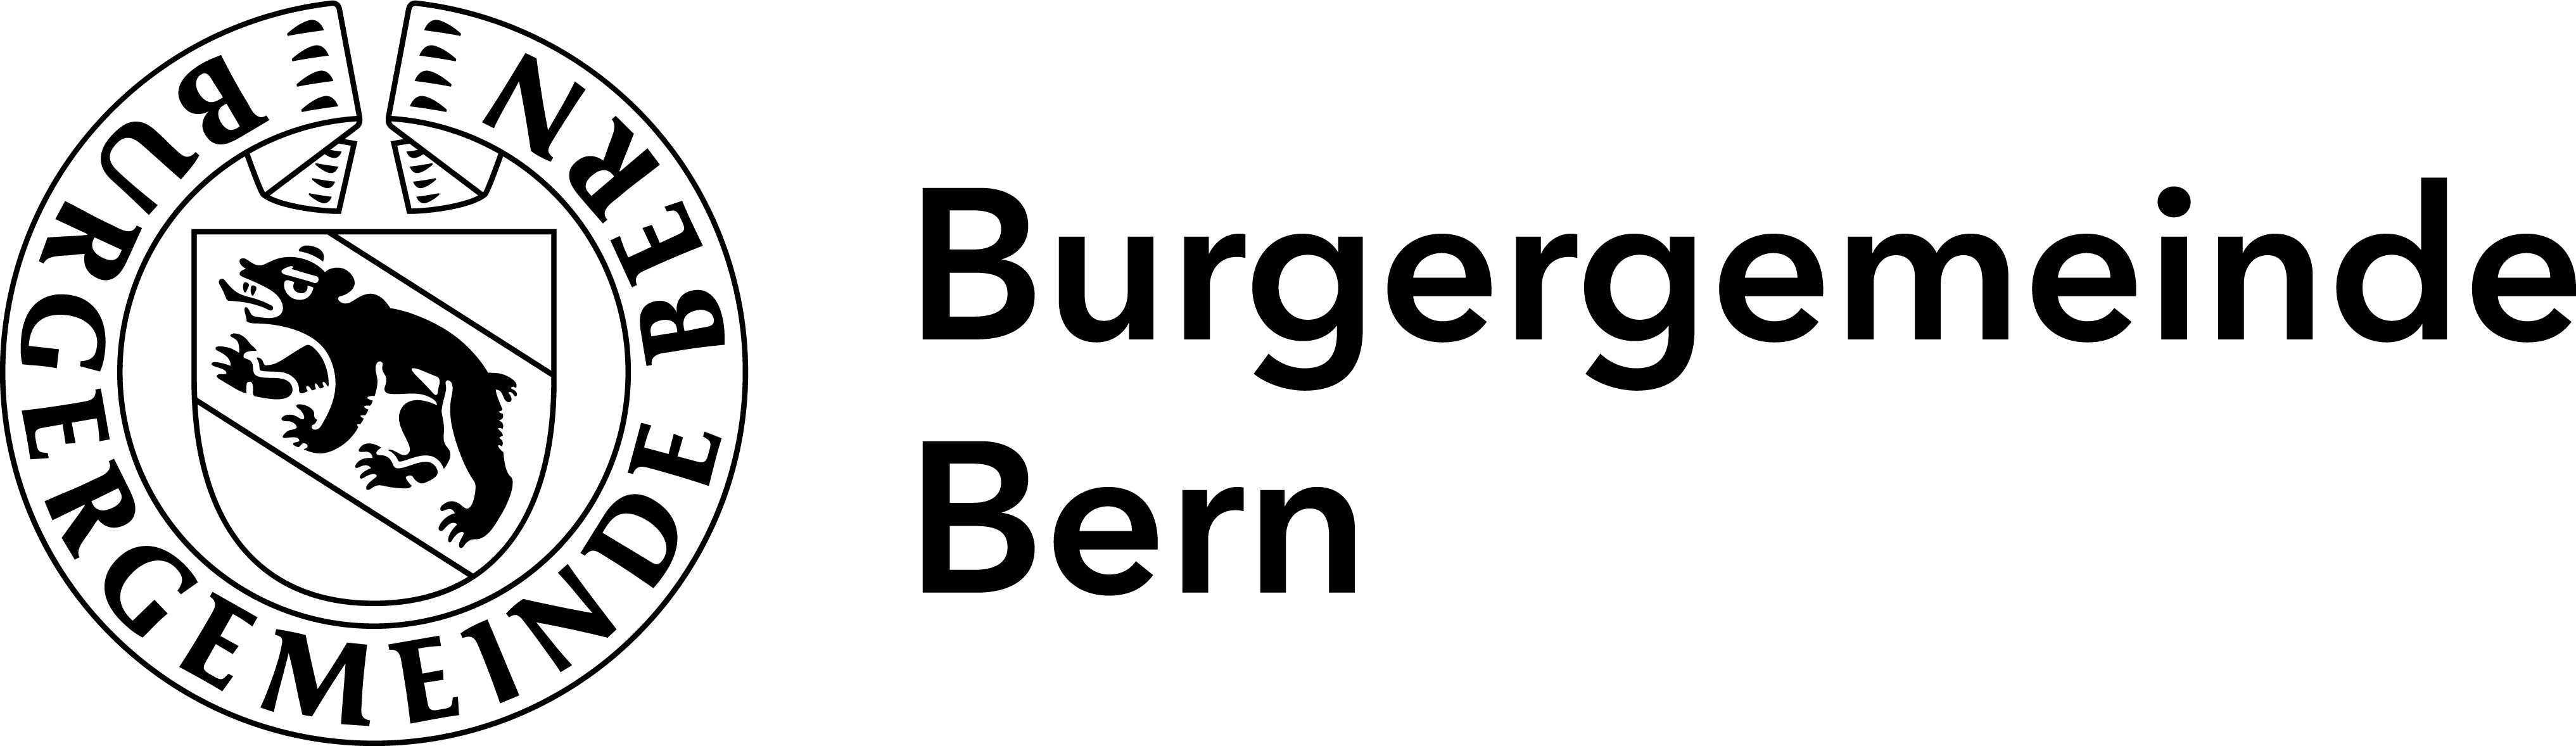 BGB Logo Screen S